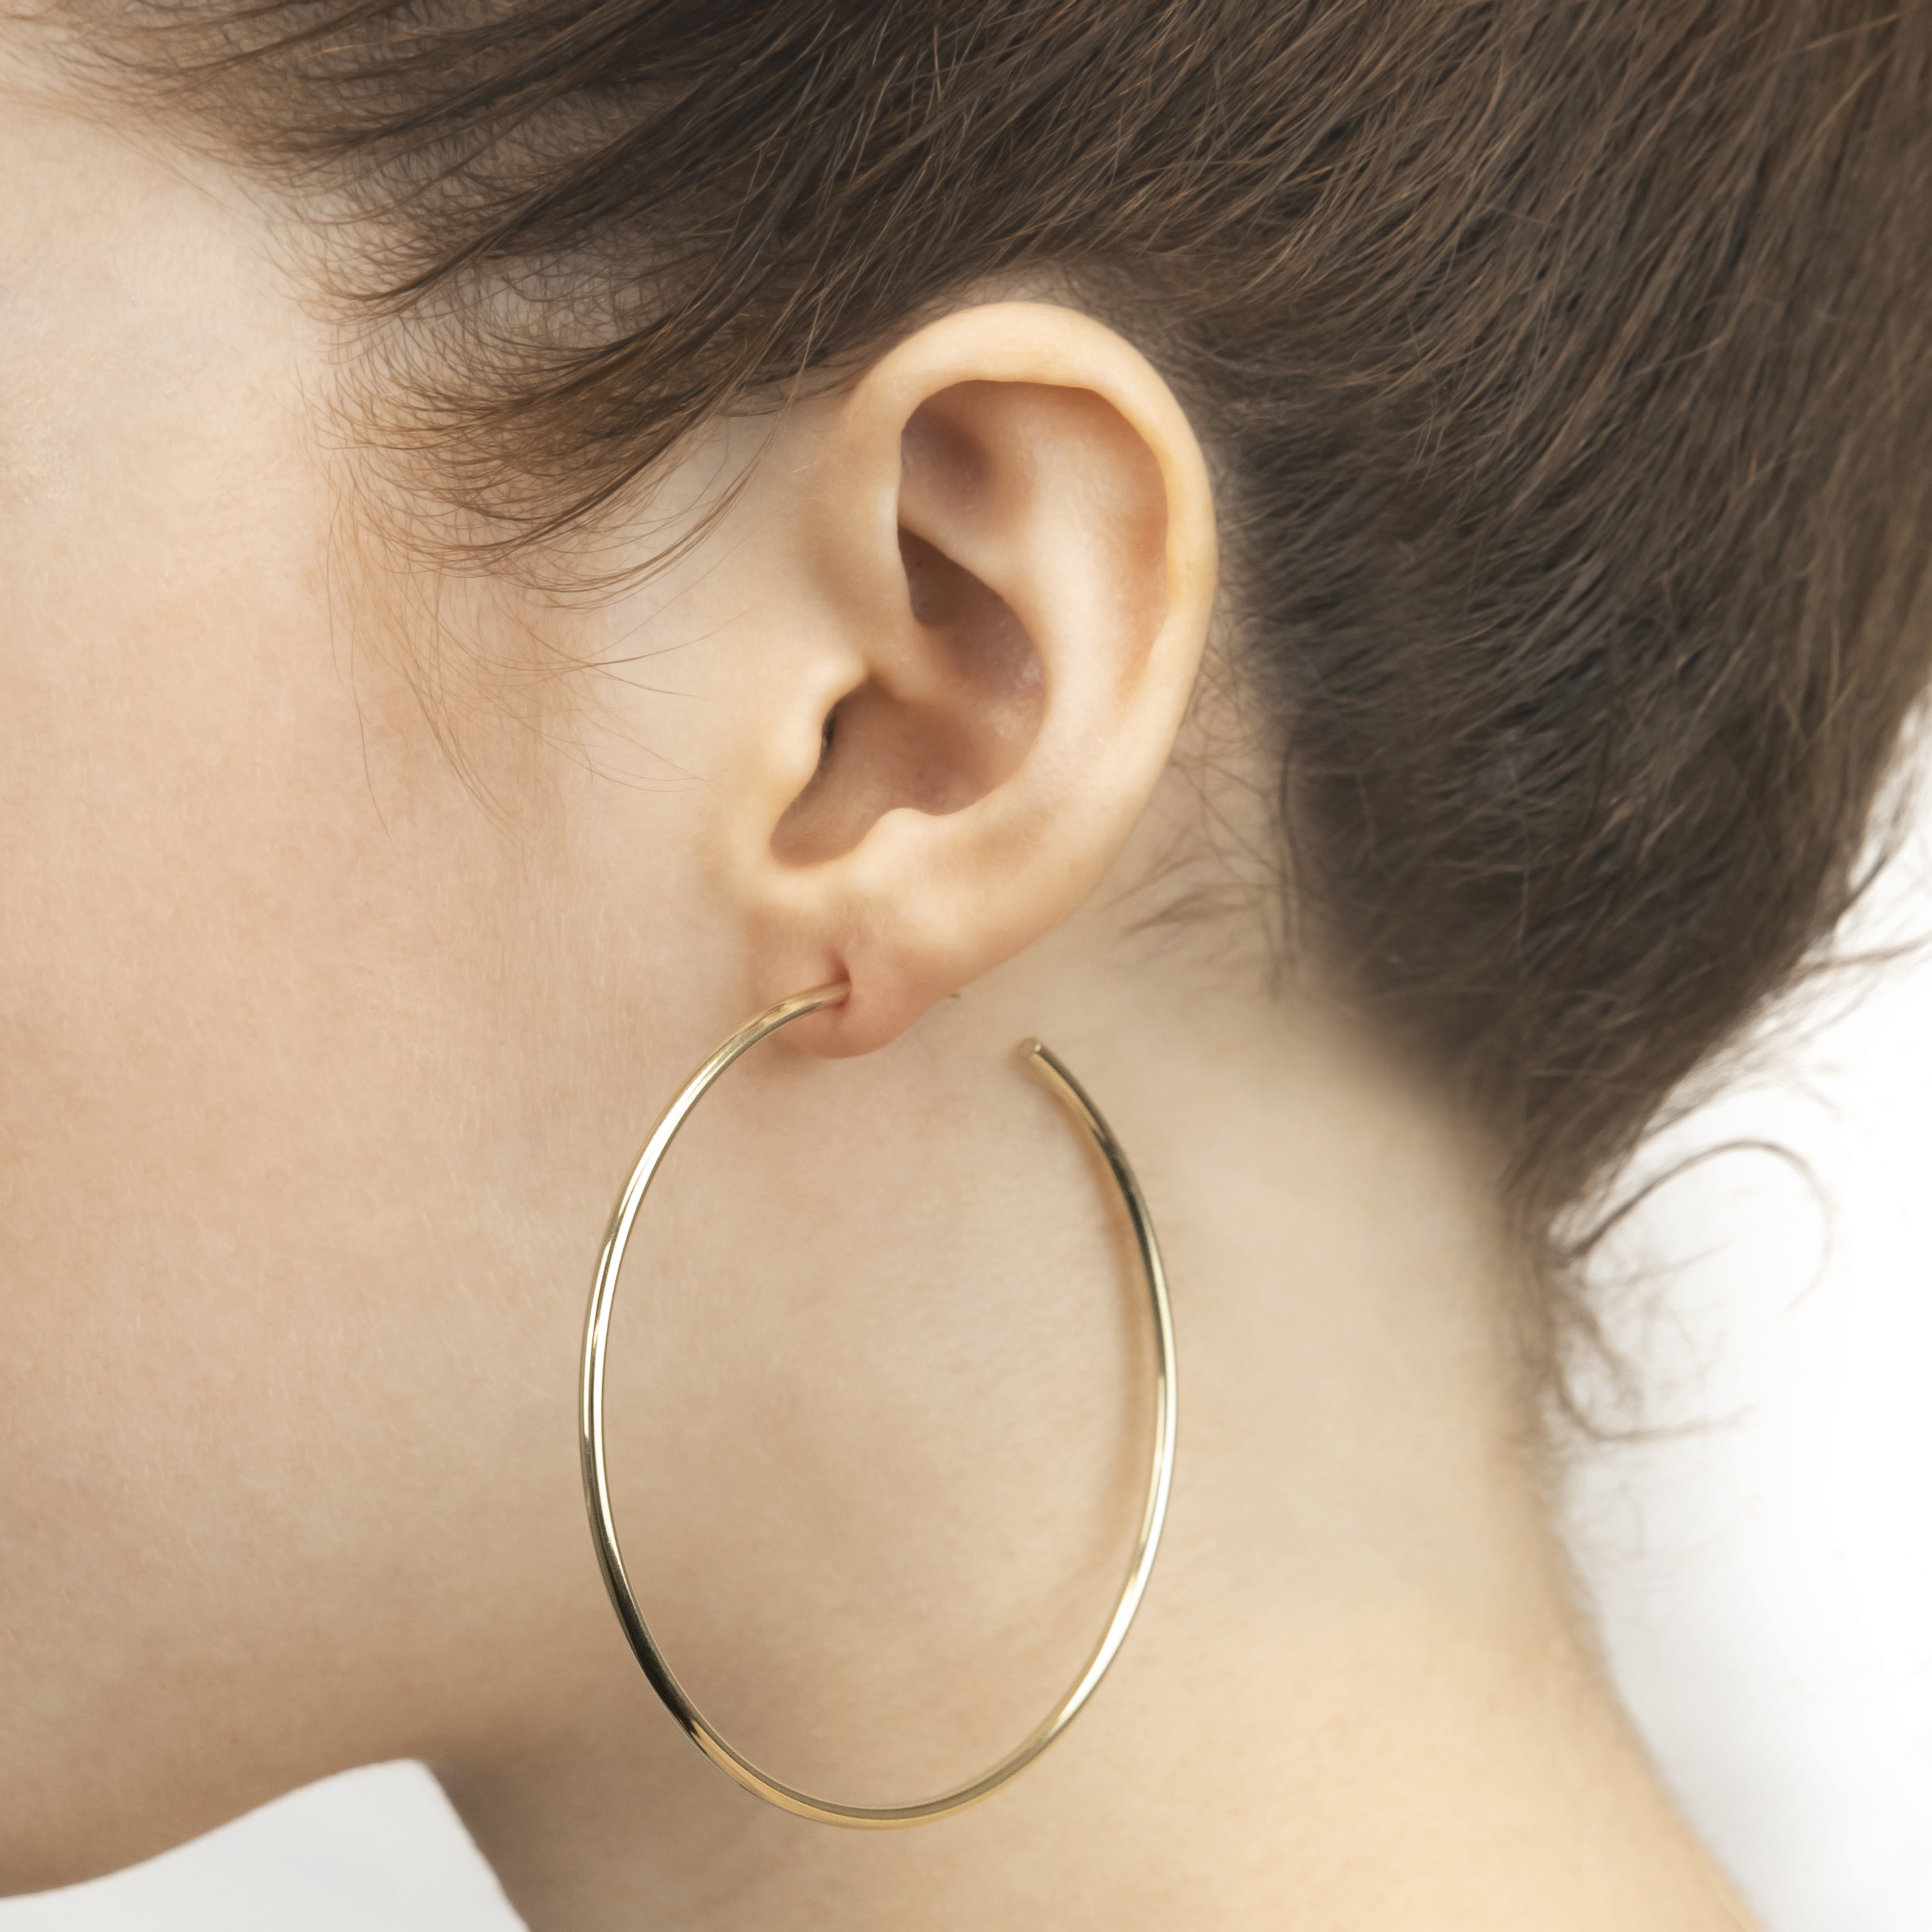 Vintage Silver Circle Hoop Earrings Medium-Large Size, Light Boho Dangle  Jewelry for Women